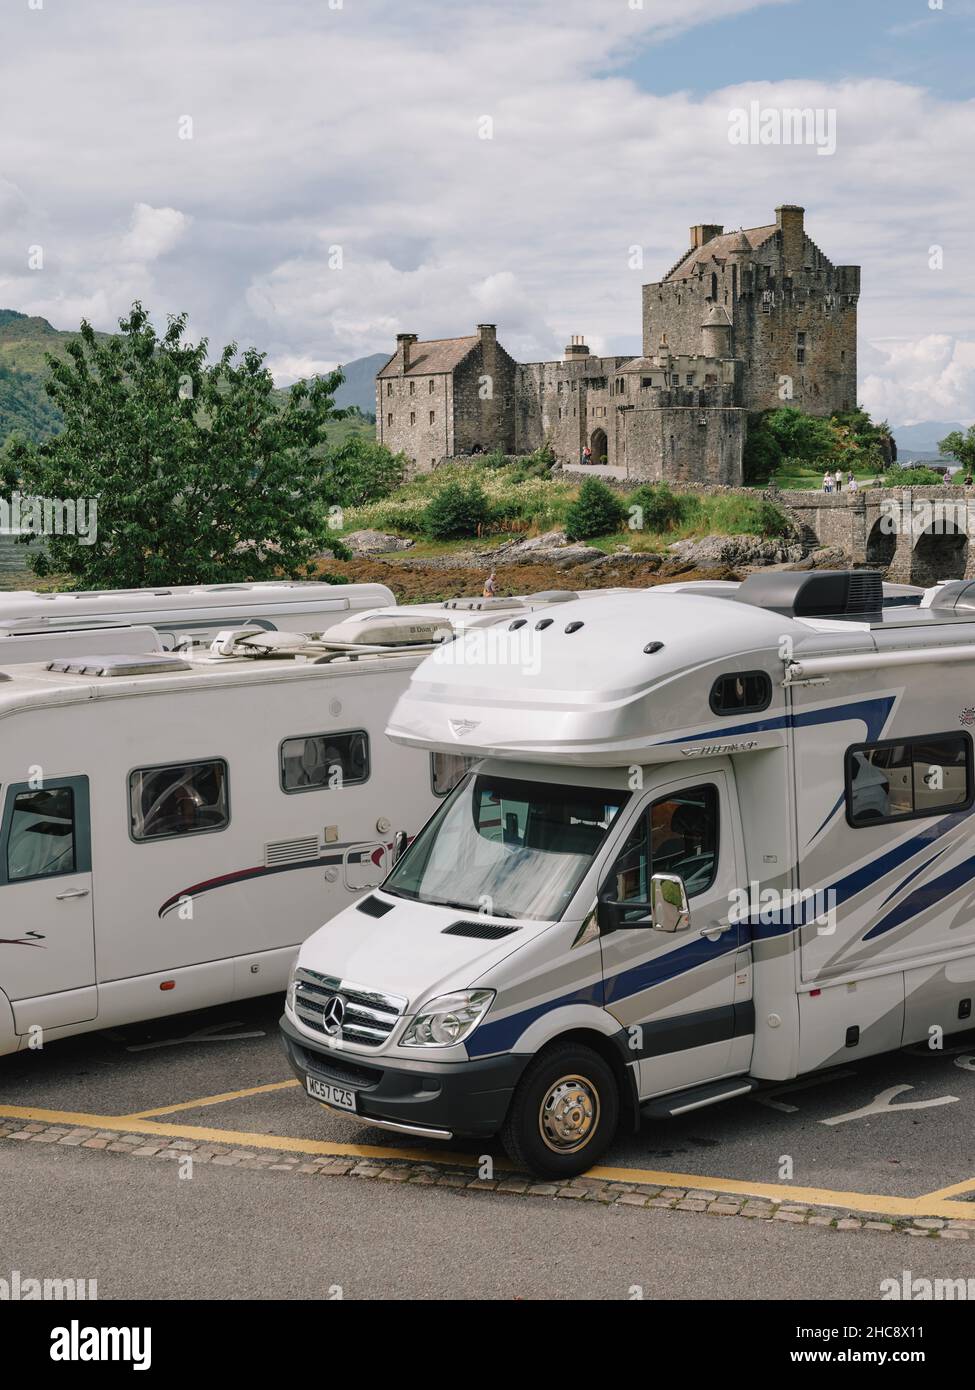 Camper turistici furgoni camper parcheggiati presso il castello di Eilean Donan, Loch Duich, Kyle of Lochalsh, West Highlands Scozia UK - camper staycation Foto Stock